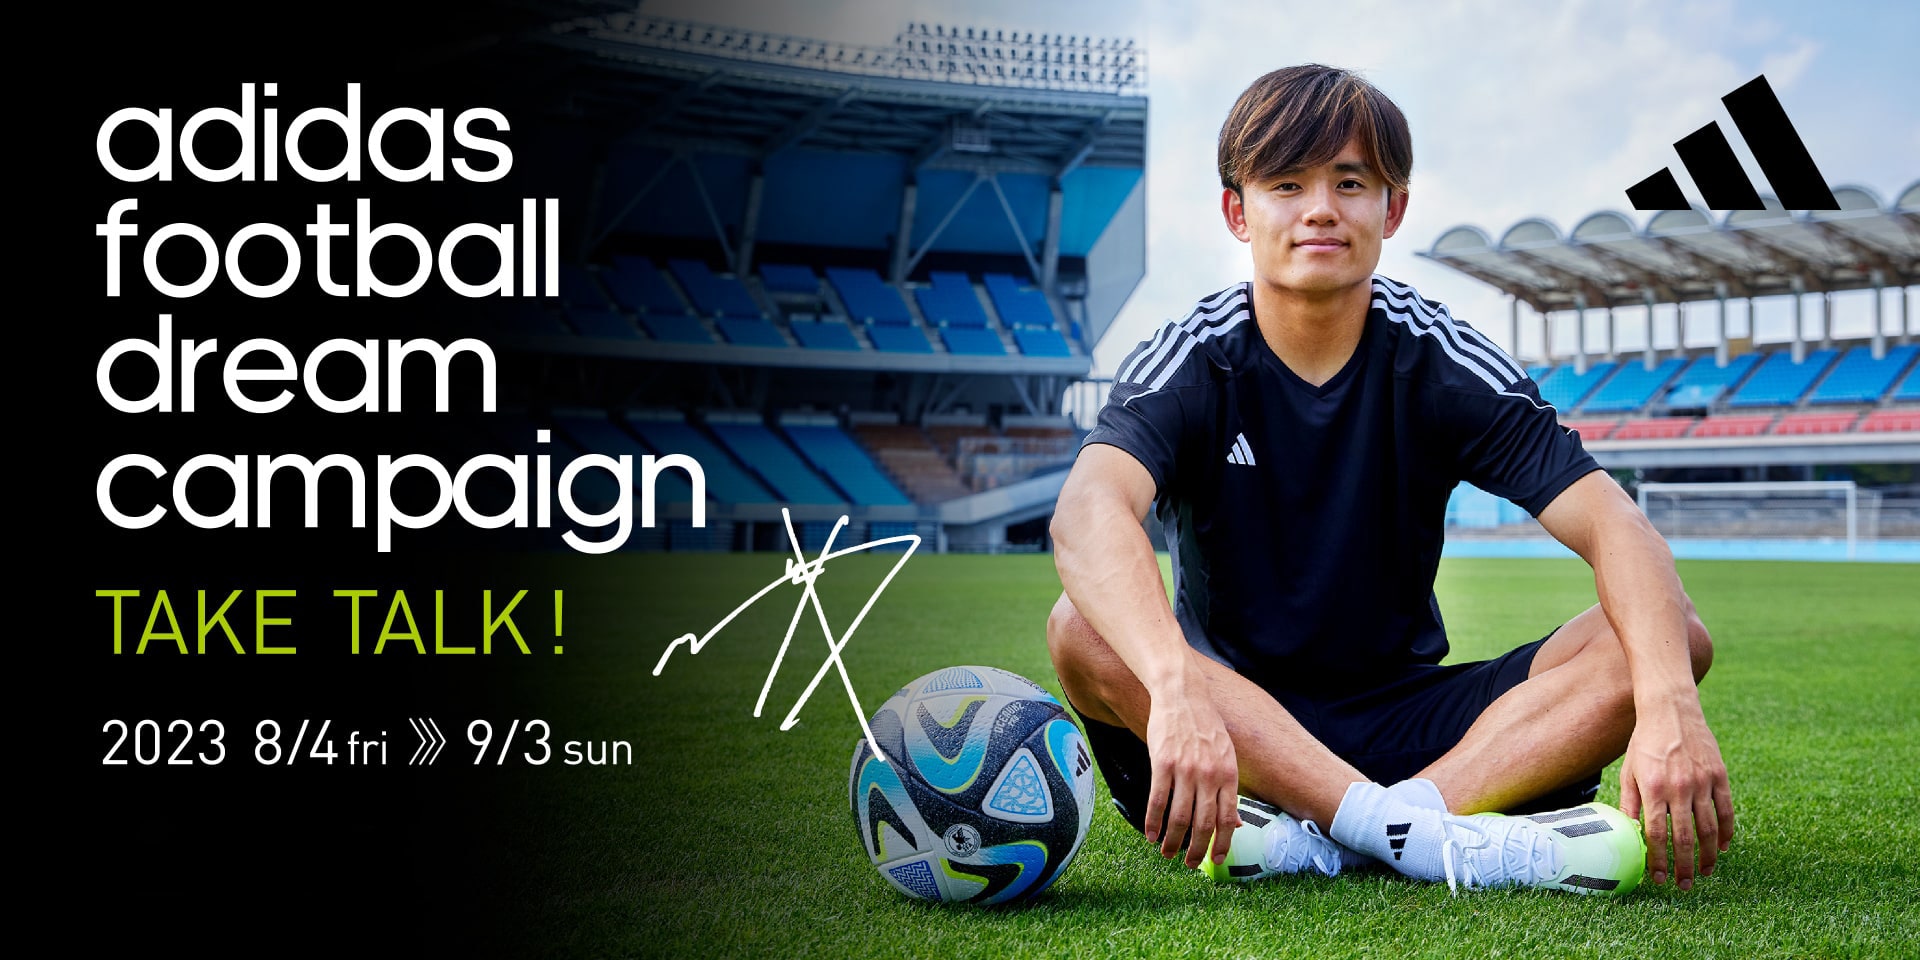 adidas Football Dream Campaign - TAKE TALK! -